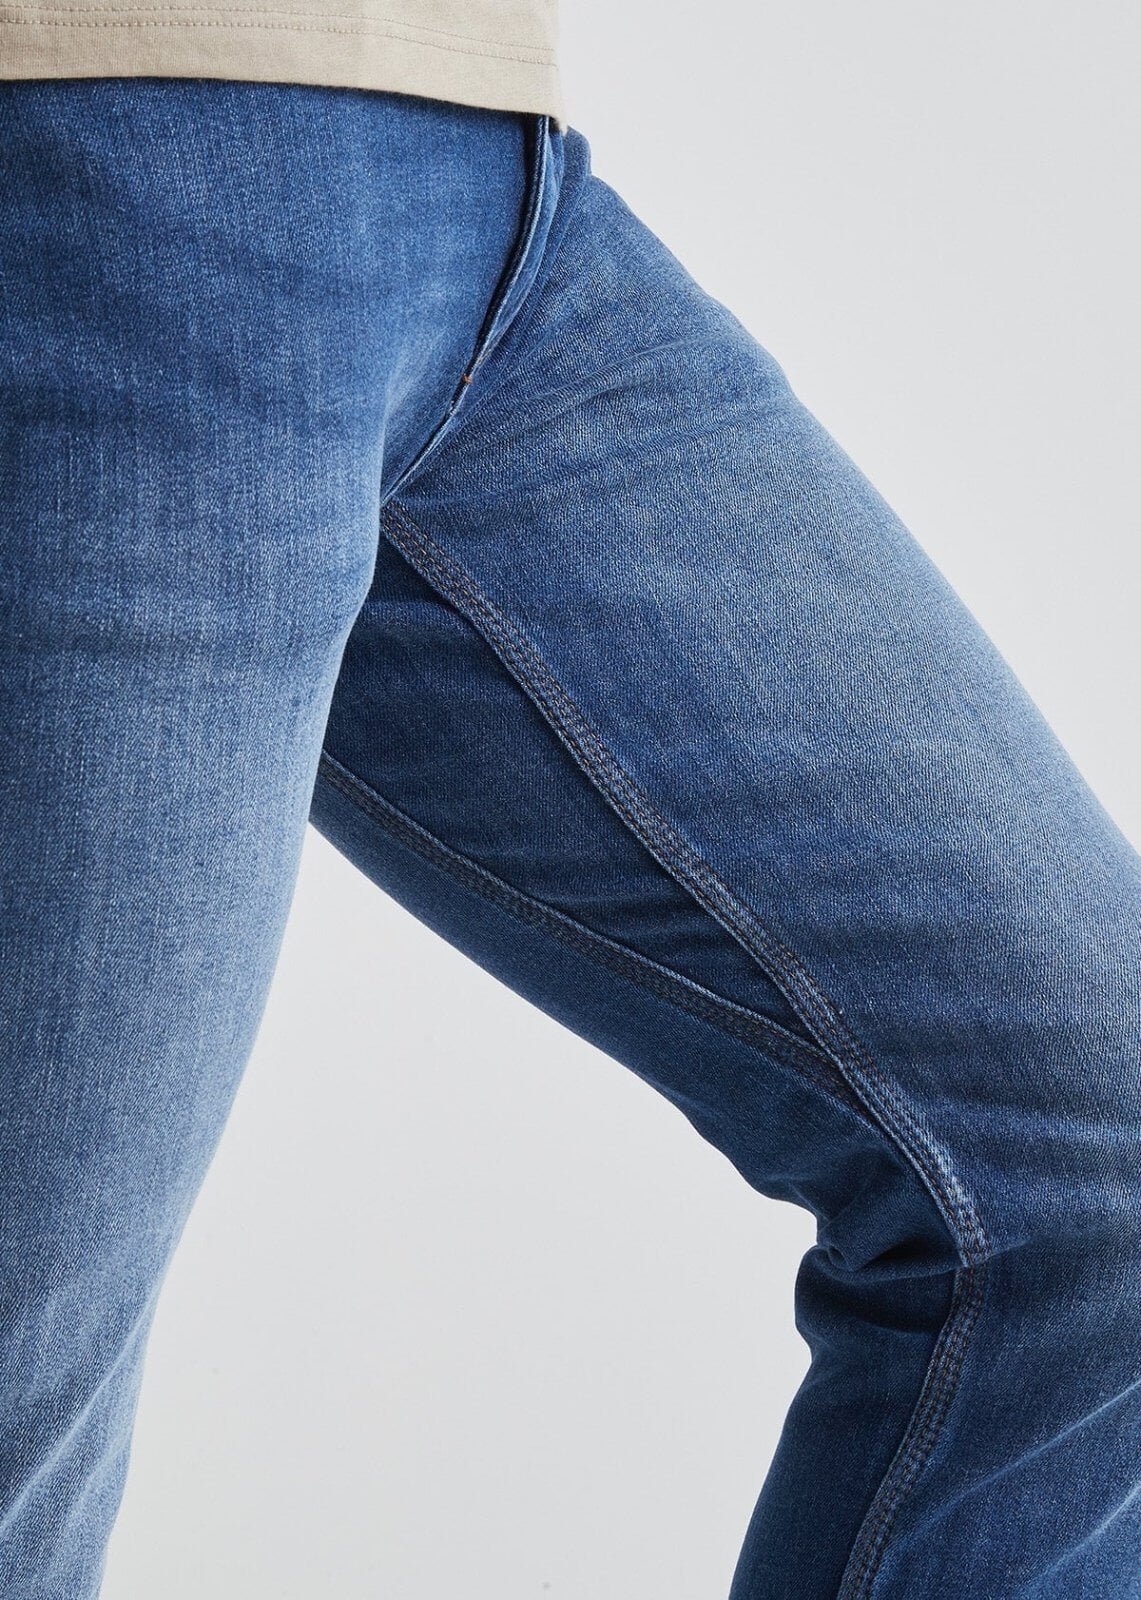 Men's Skinny Slim Fit Stretch Jeans Denim Breathable Casual Pencil Pants